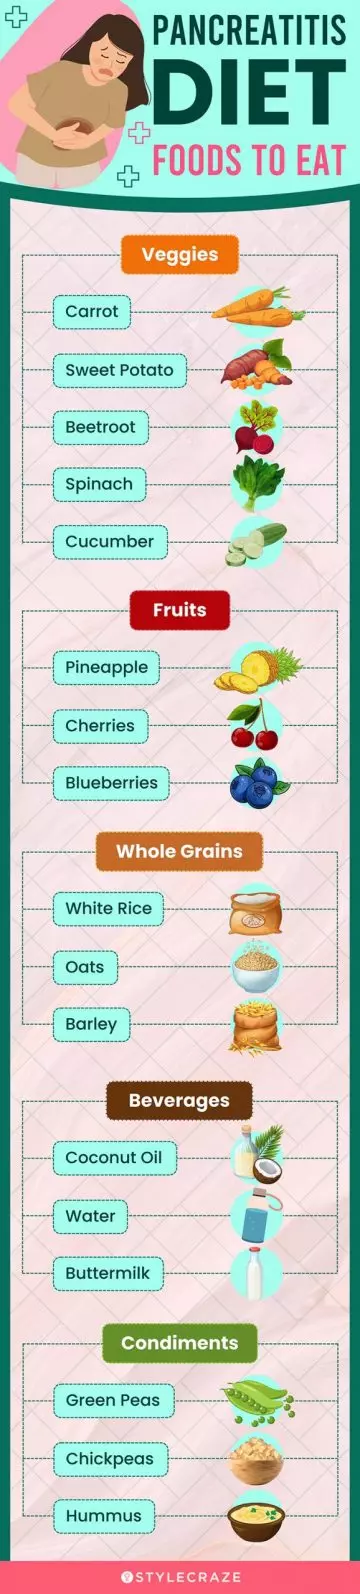 pancreatitis diet foods to eat (infographic)